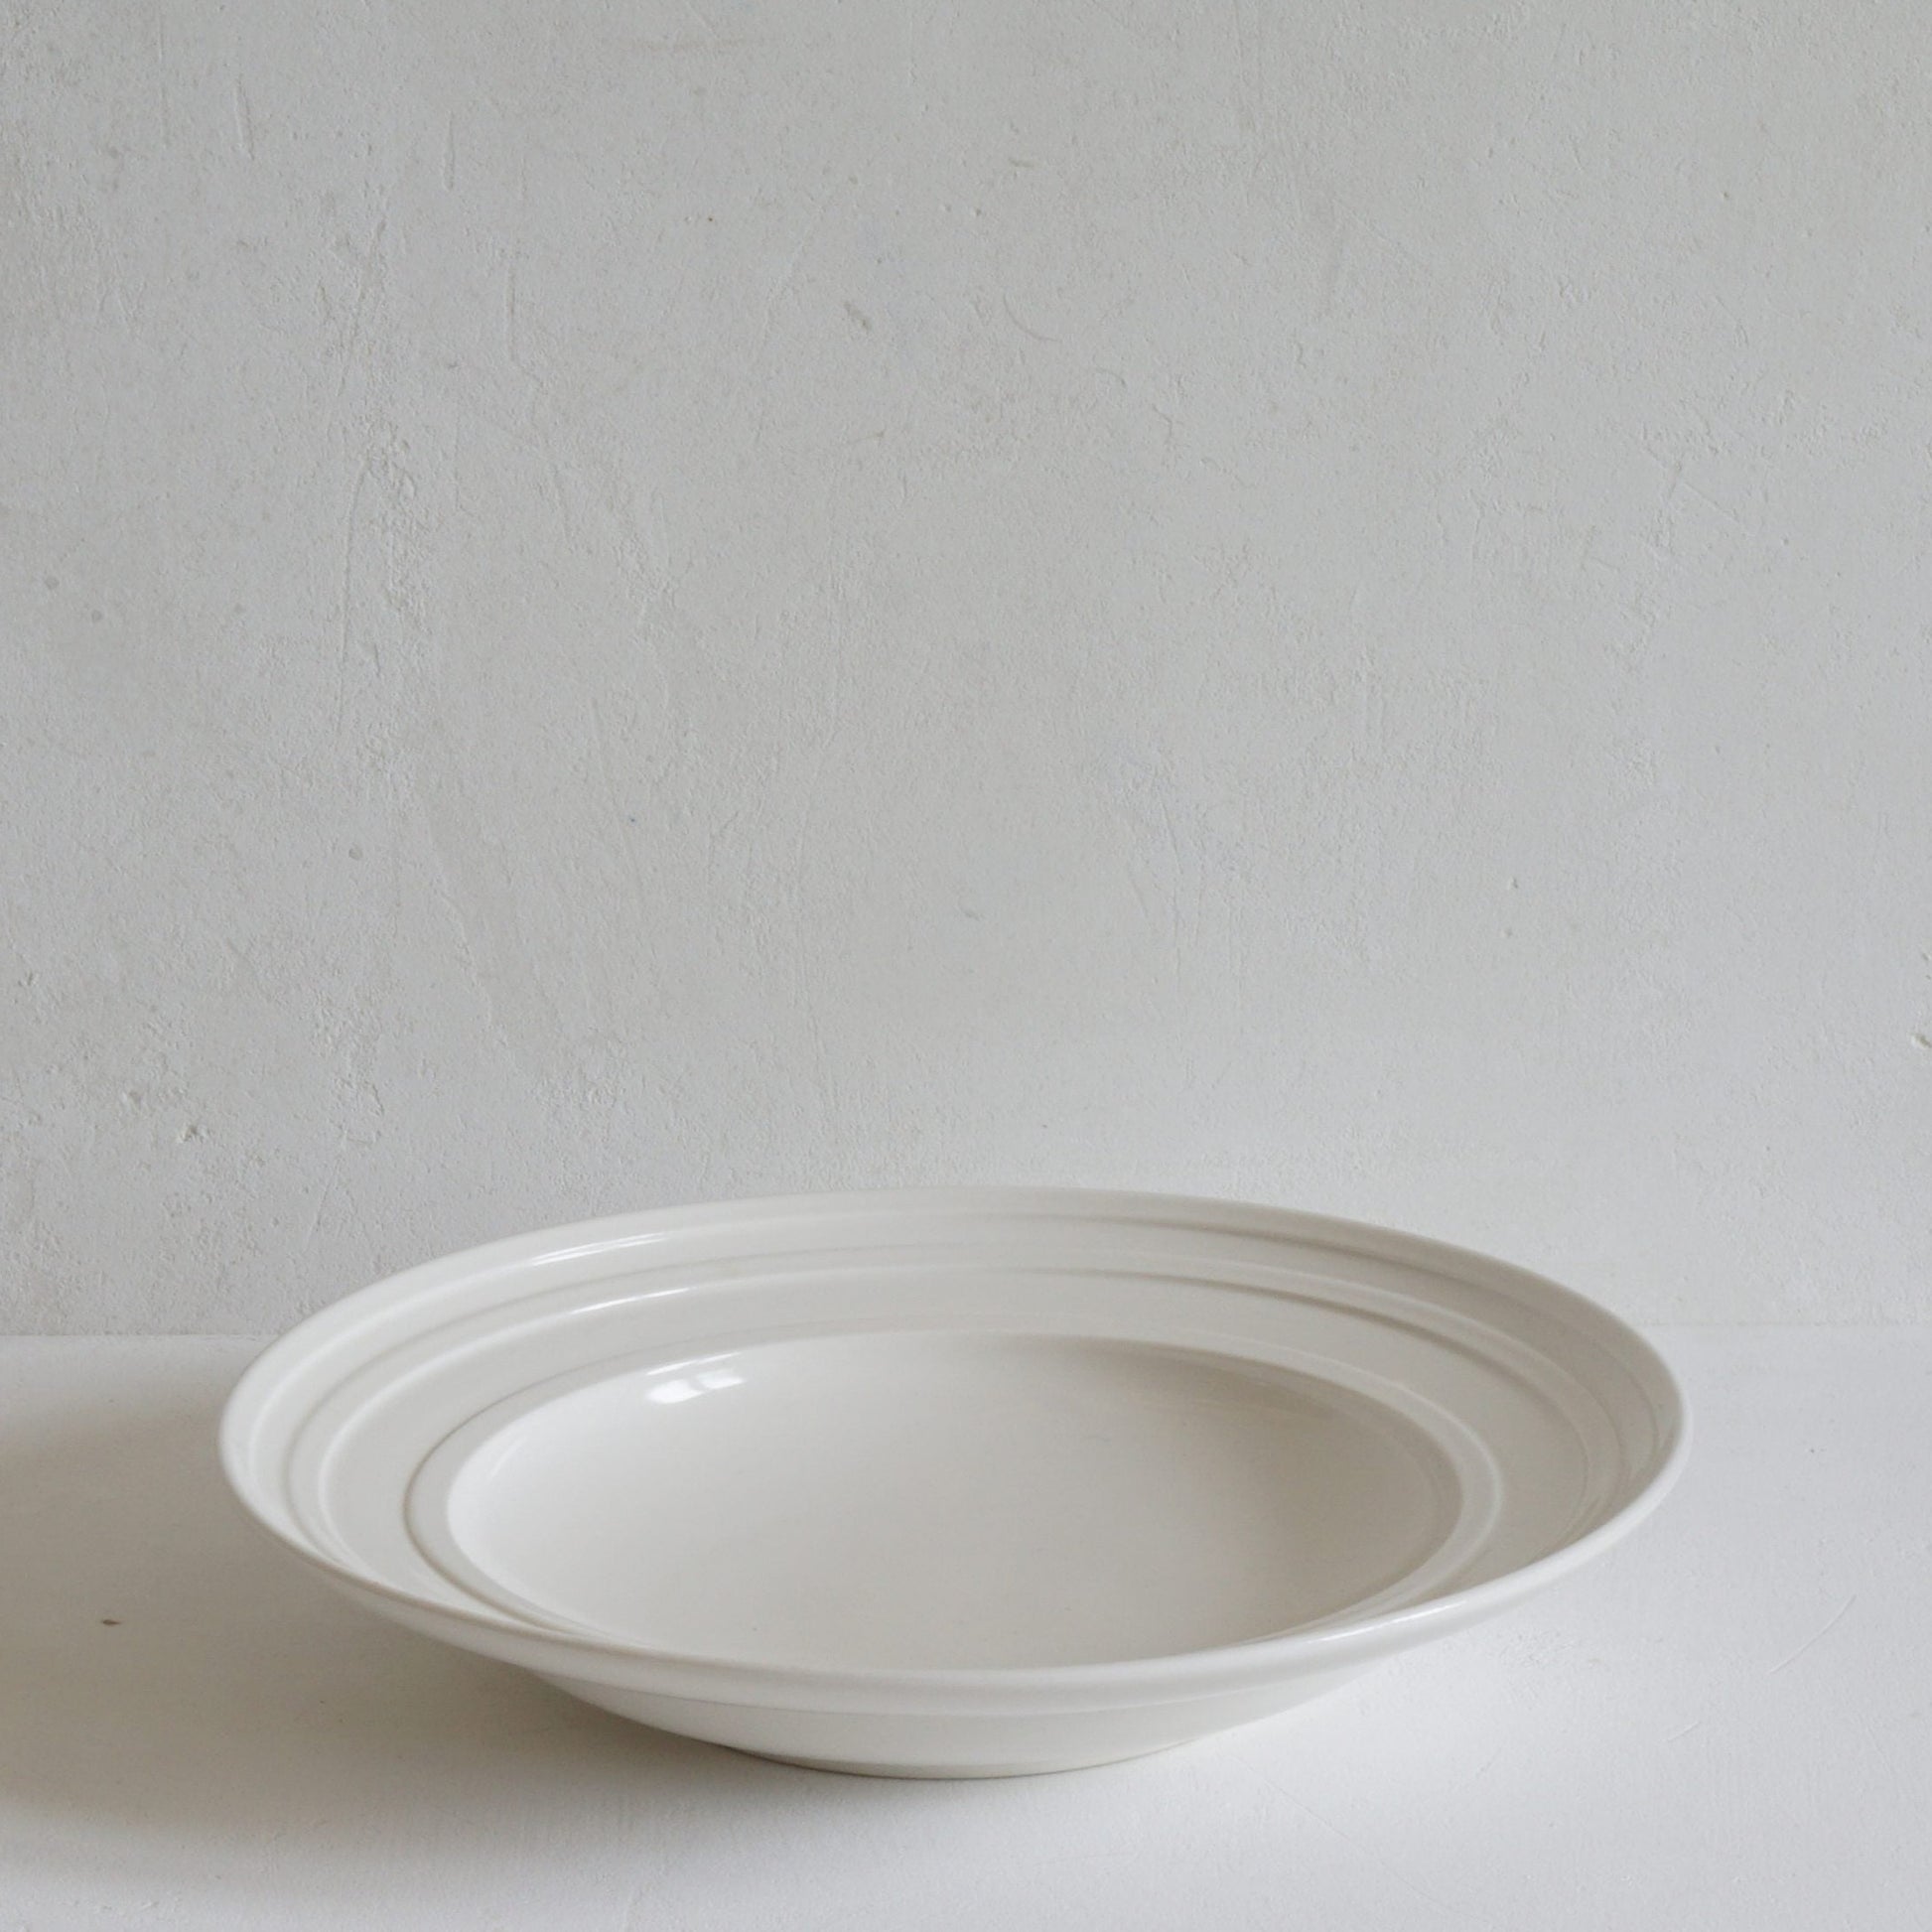 Impressed Line Shallow Bowl | Luxury Porcelain Dinnerware